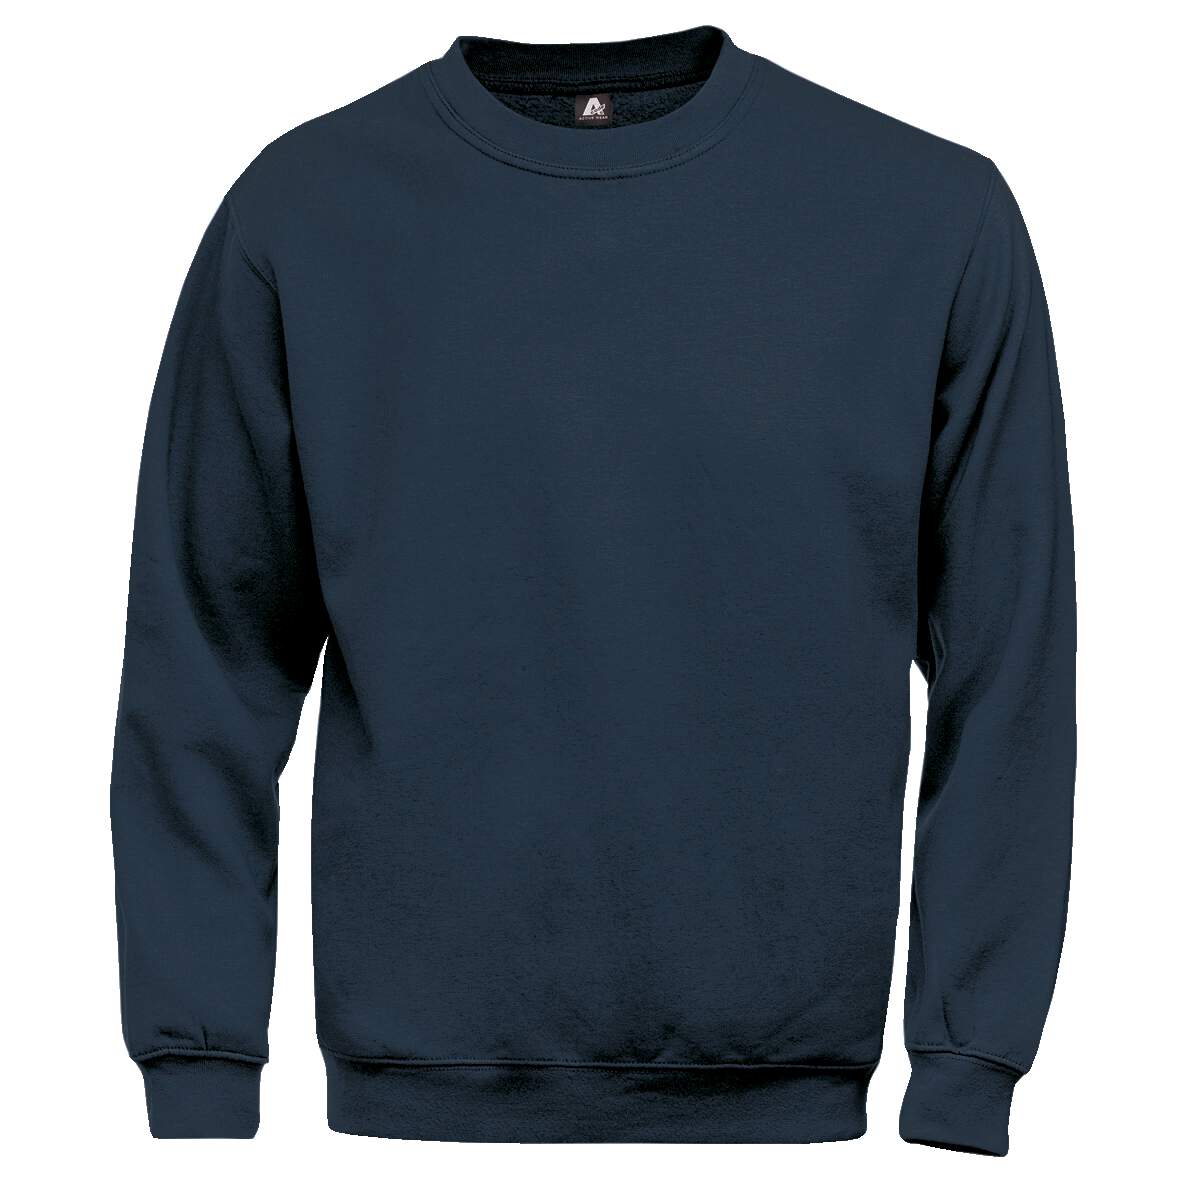 1181245 - Sweatshirt marine 100225